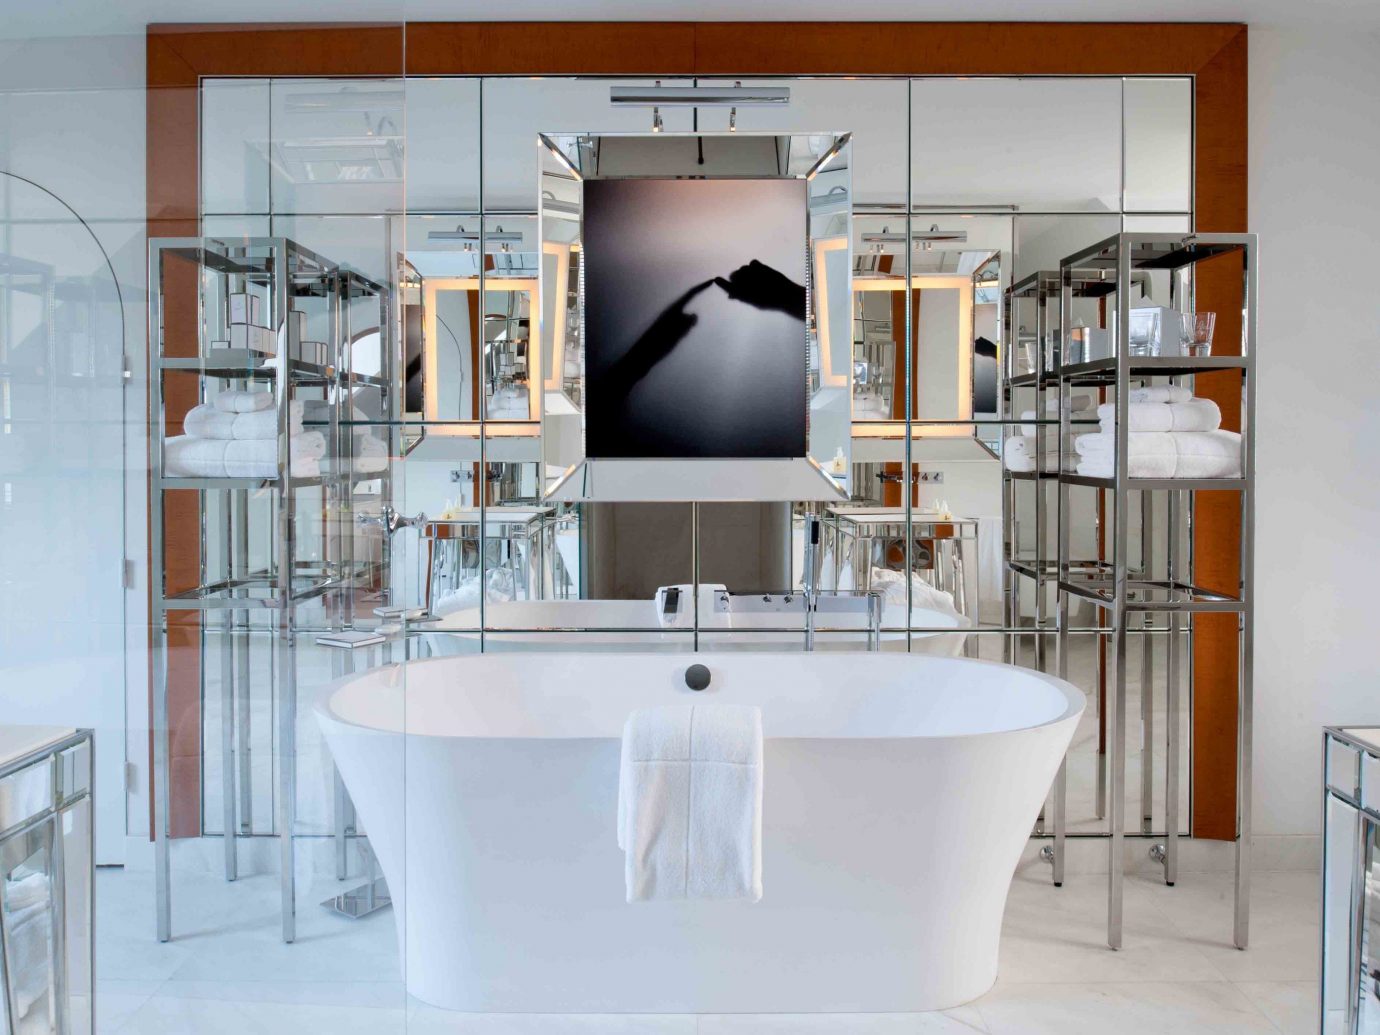 France Hotels Paris indoor wall room bathroom interior design furniture home plumbing fixture Design bathtub cabinetry bathroom cabinet kitchen appliance